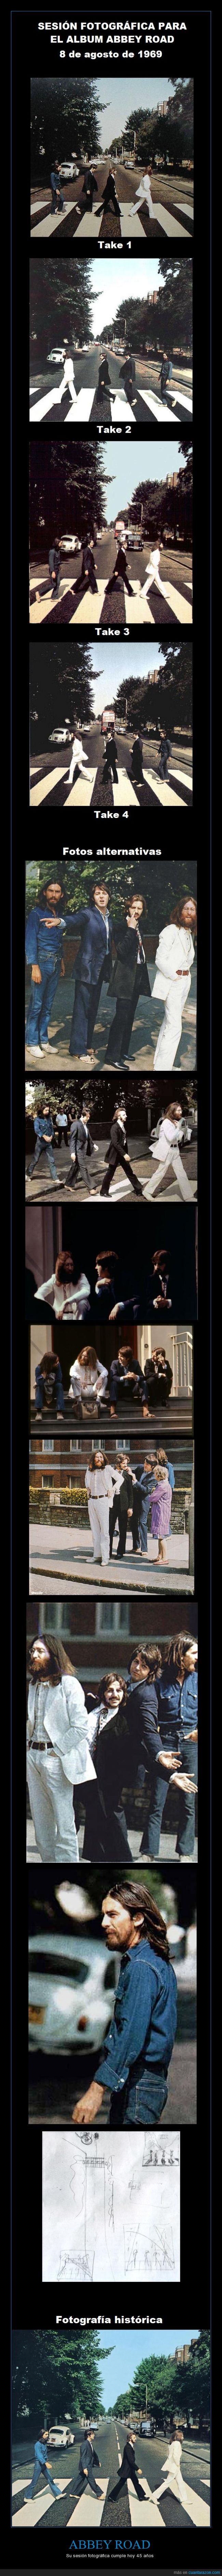 45 años ya,Abbey Road,Fotografías hechas por Iain Mcmillan,George Harrison,Hay más fotos,John Lennon,Paul McCartney,Paul McCartney NO está muerto,Ringo Starr,Sesión fotográfica,The Beatles